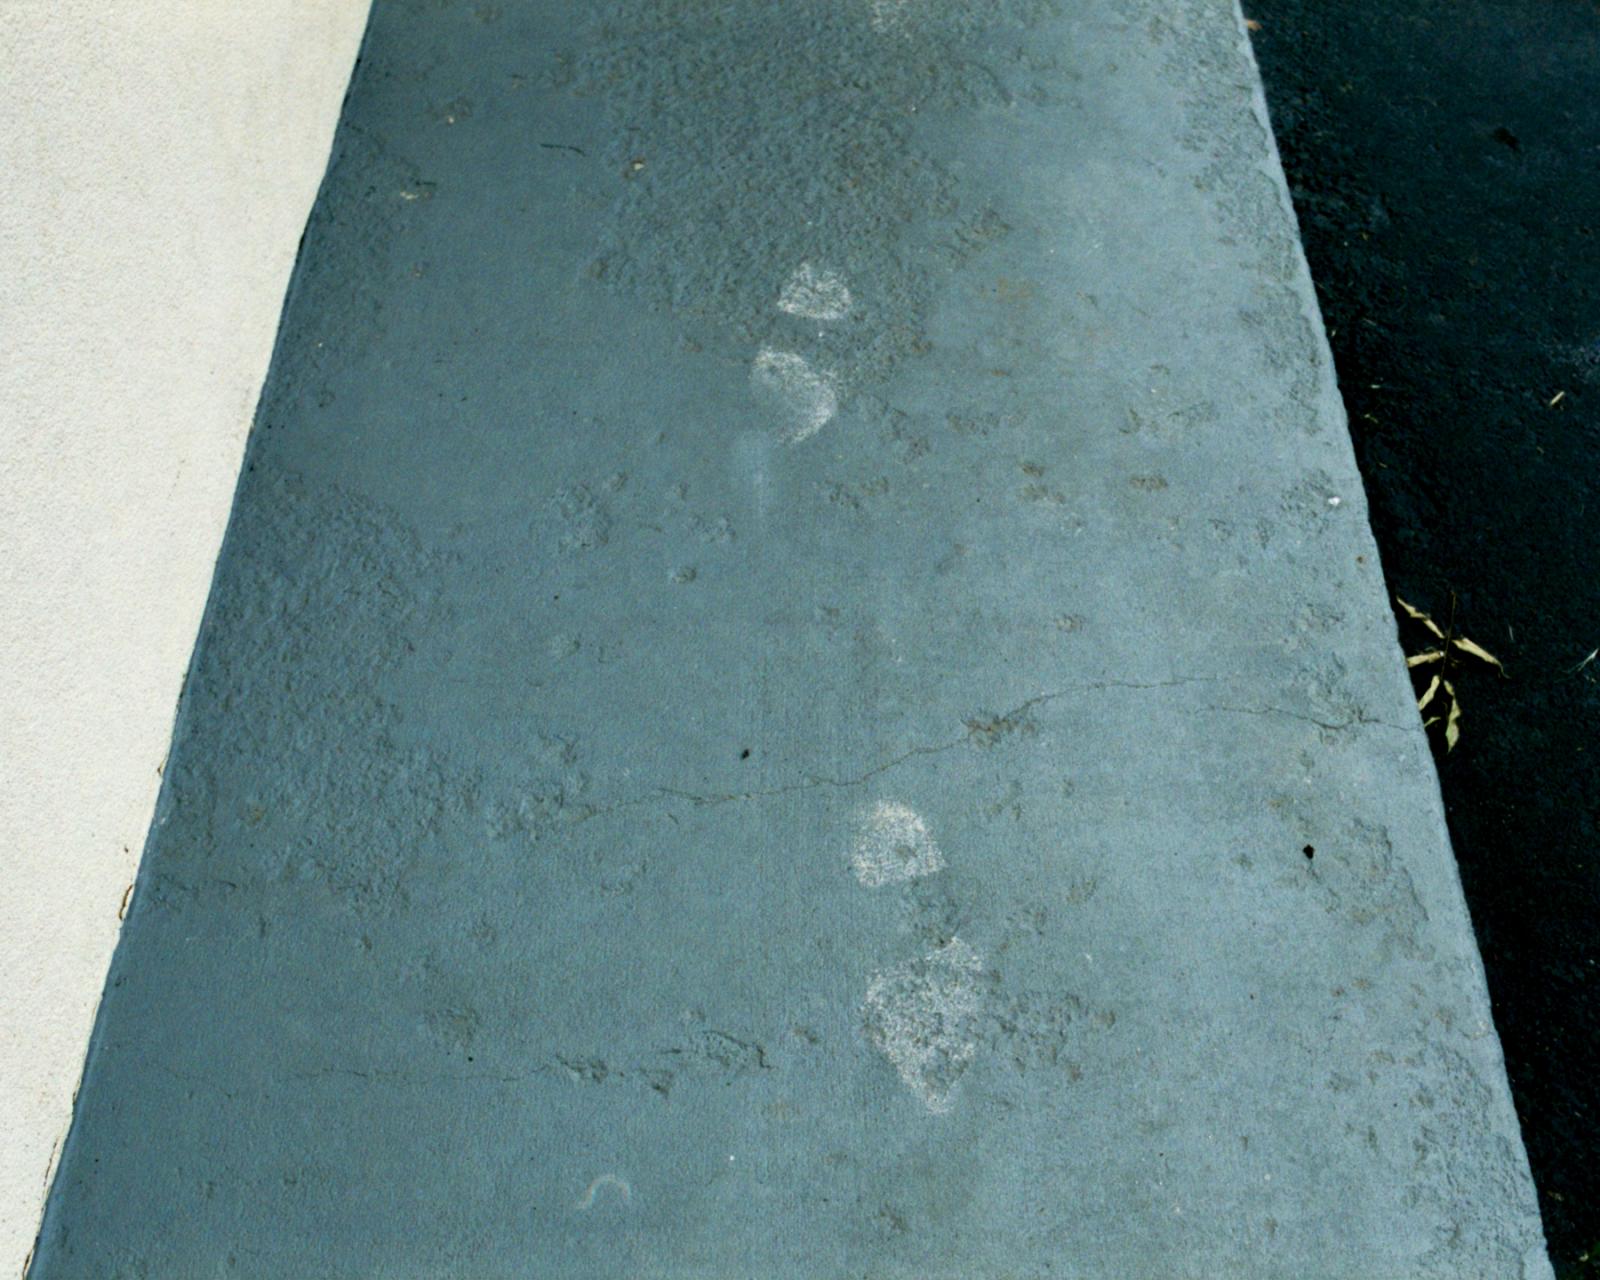 Image from Aesthetic - Motel footprints, Moore, OK.